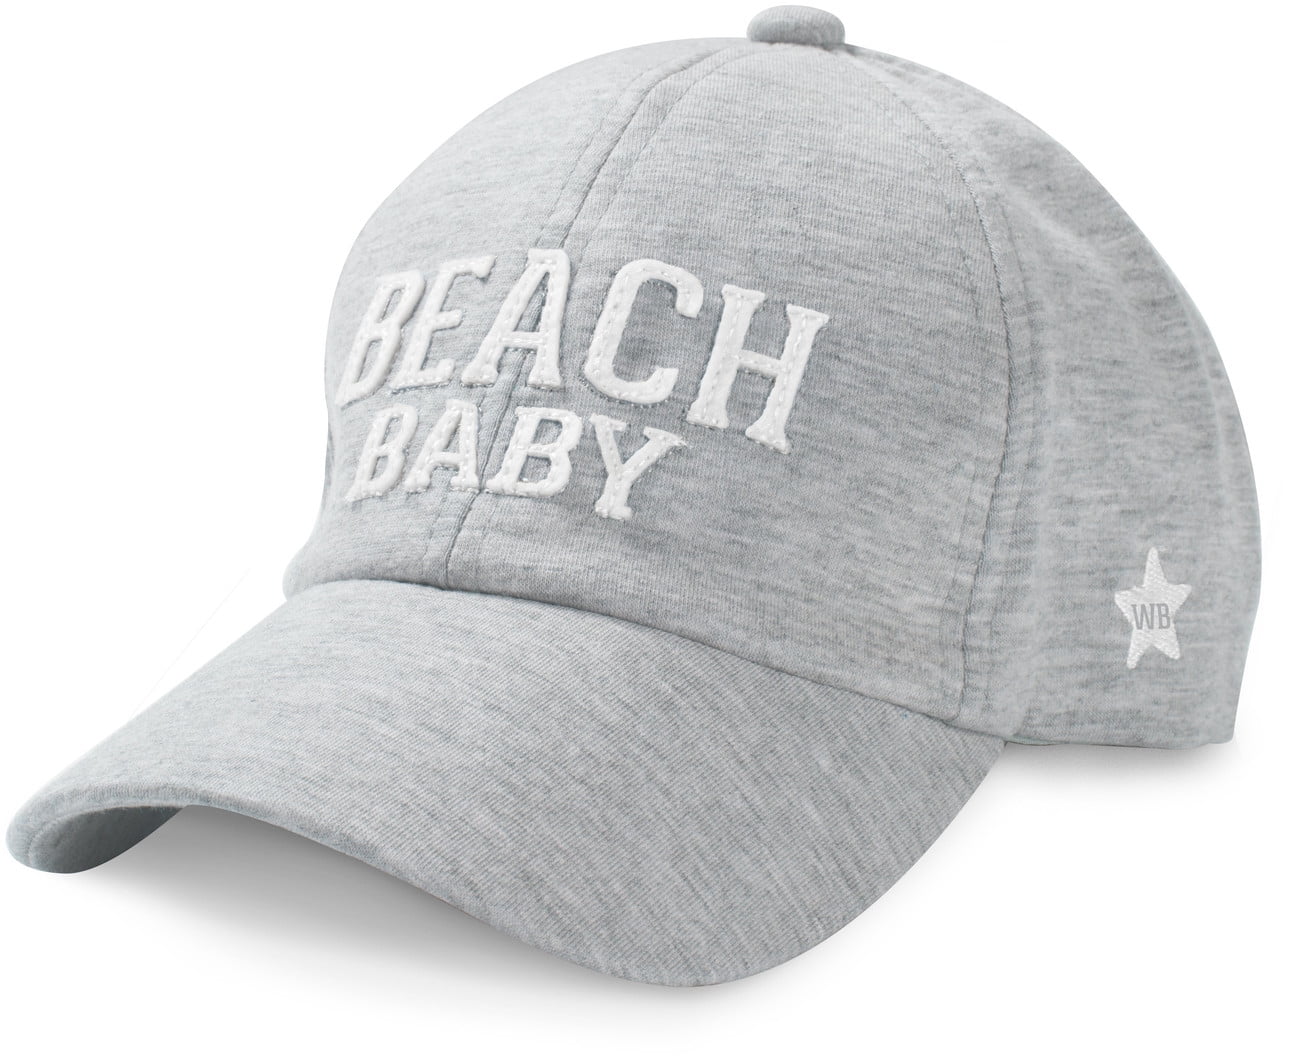 Pavilion - Beach Baby - Heathered Gray 